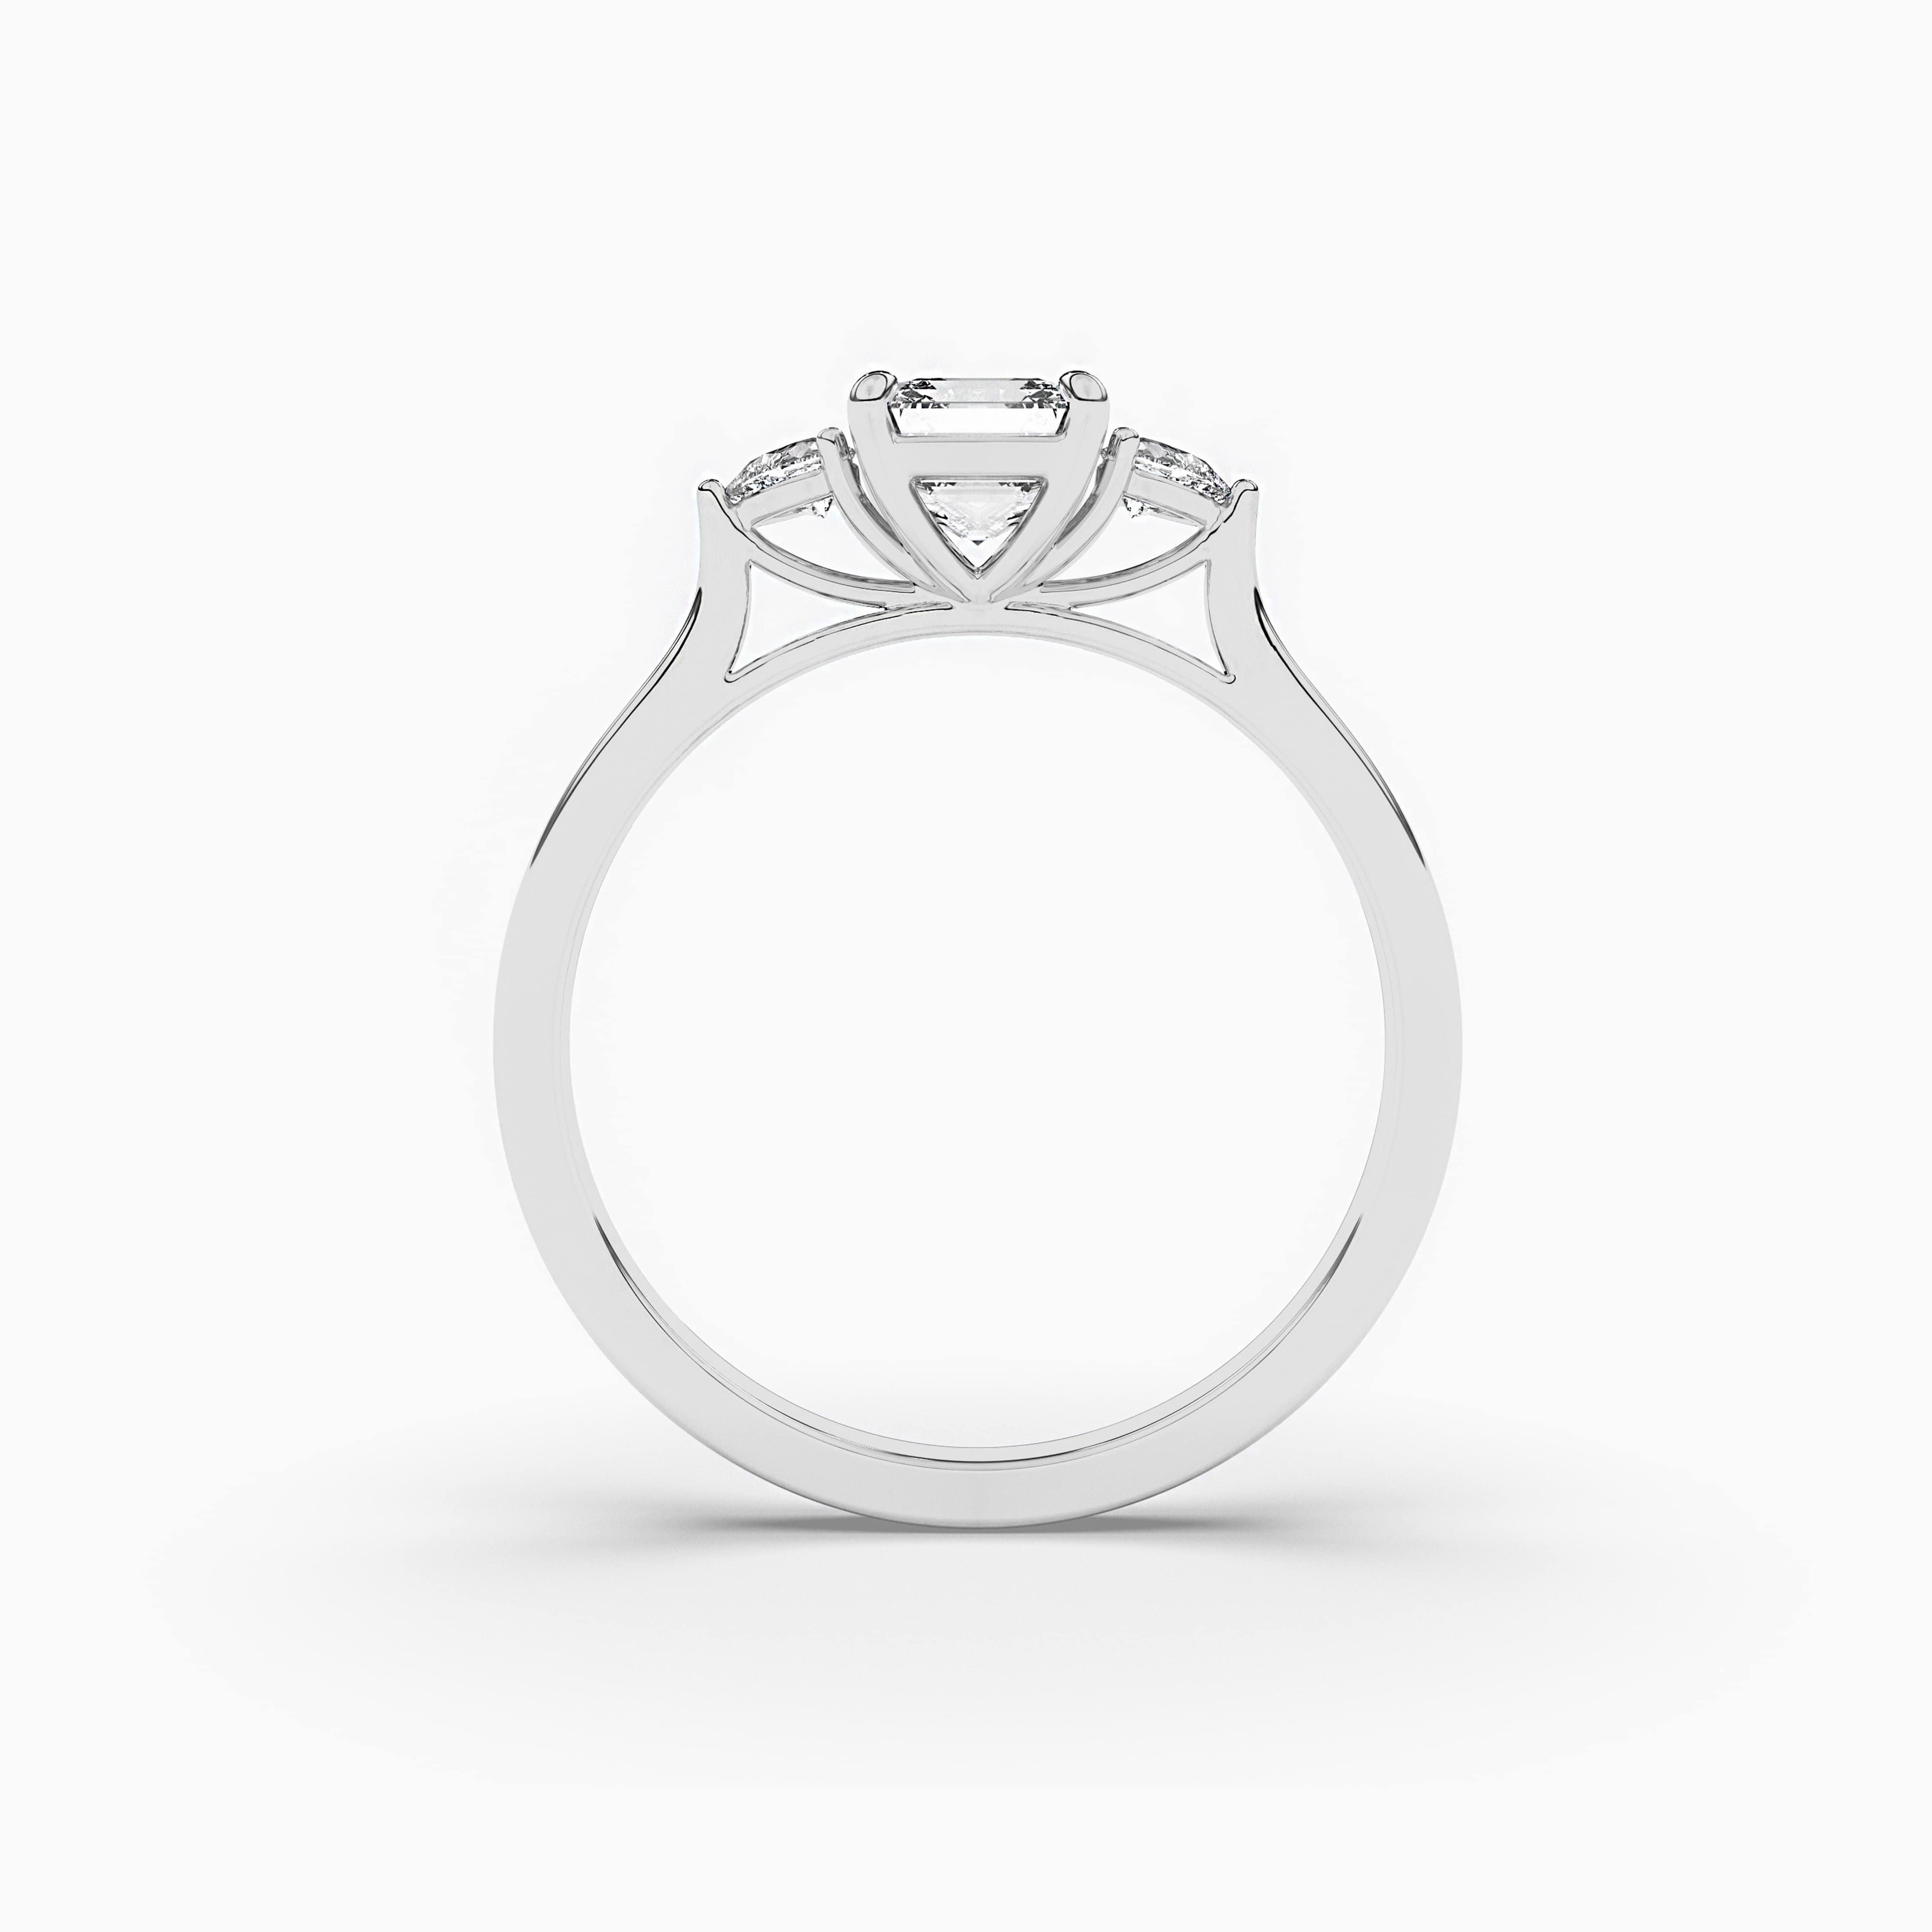 ASSCHER CUT DIAMOND ENGAGEMENT RING IN WEDDING RING WHITE GOLD